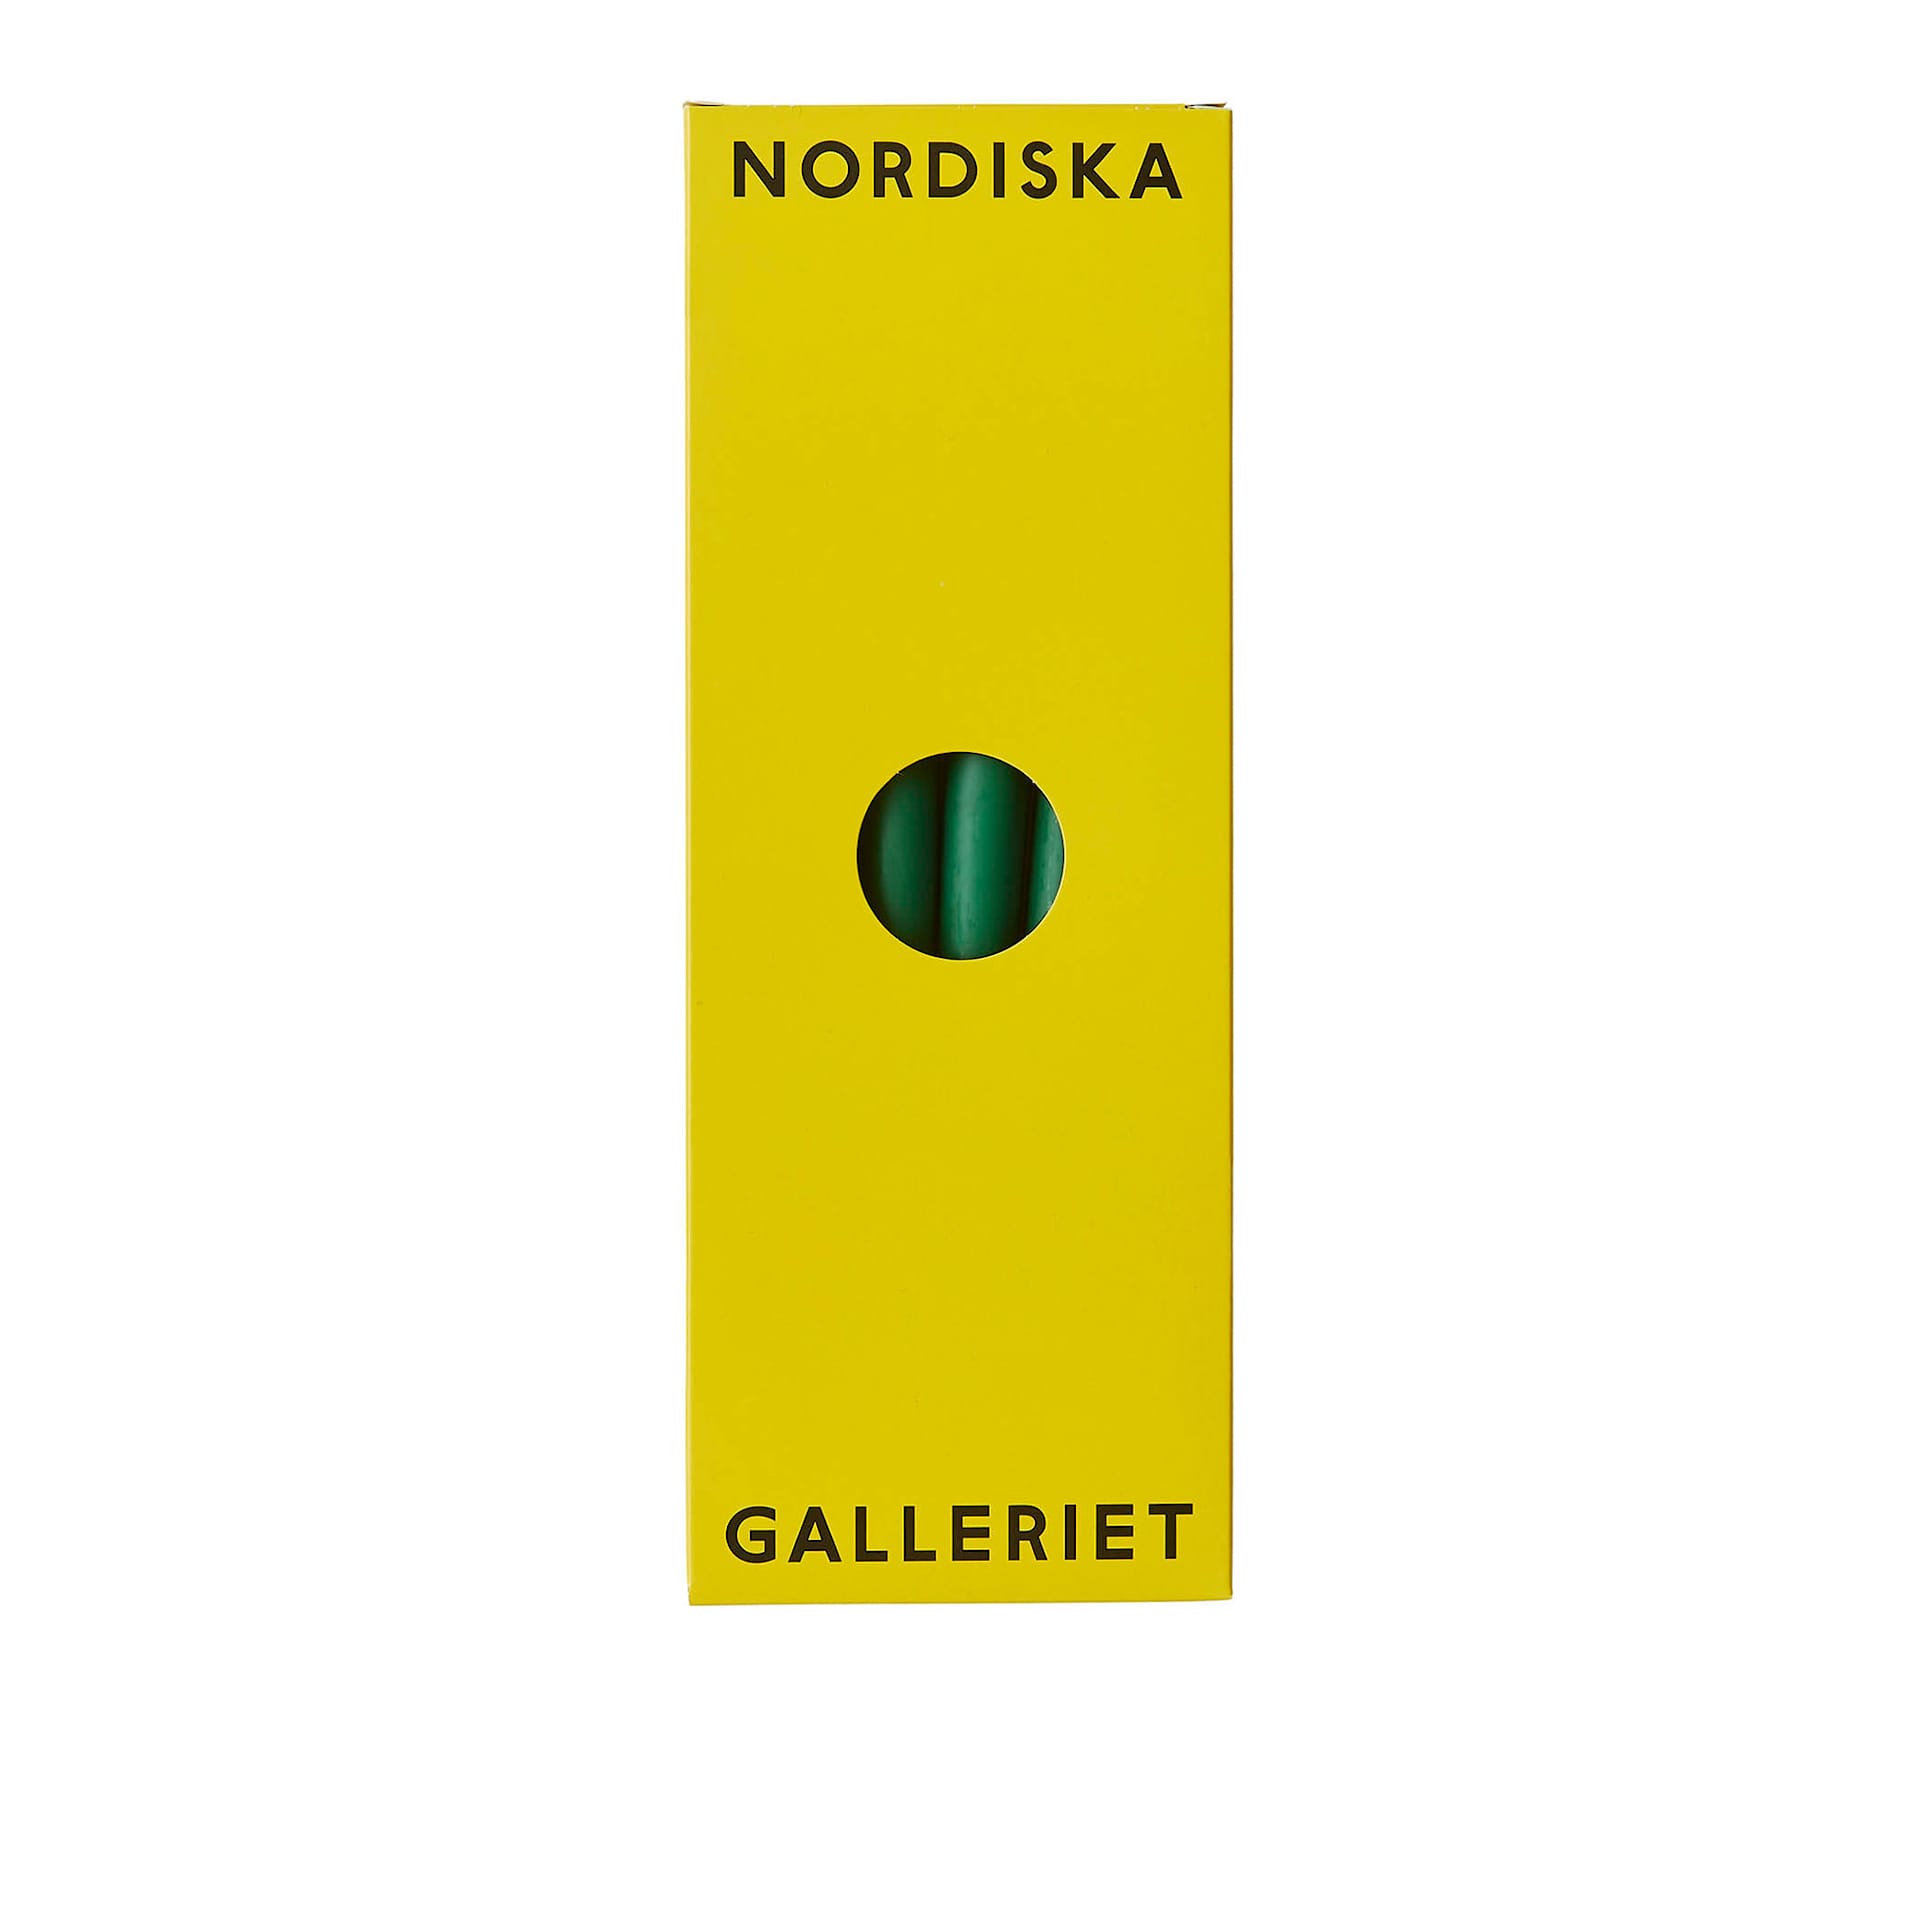 Nordiska Galleriet Candles Pack of 6 - Green - Nordiska Galleriet - NO GA